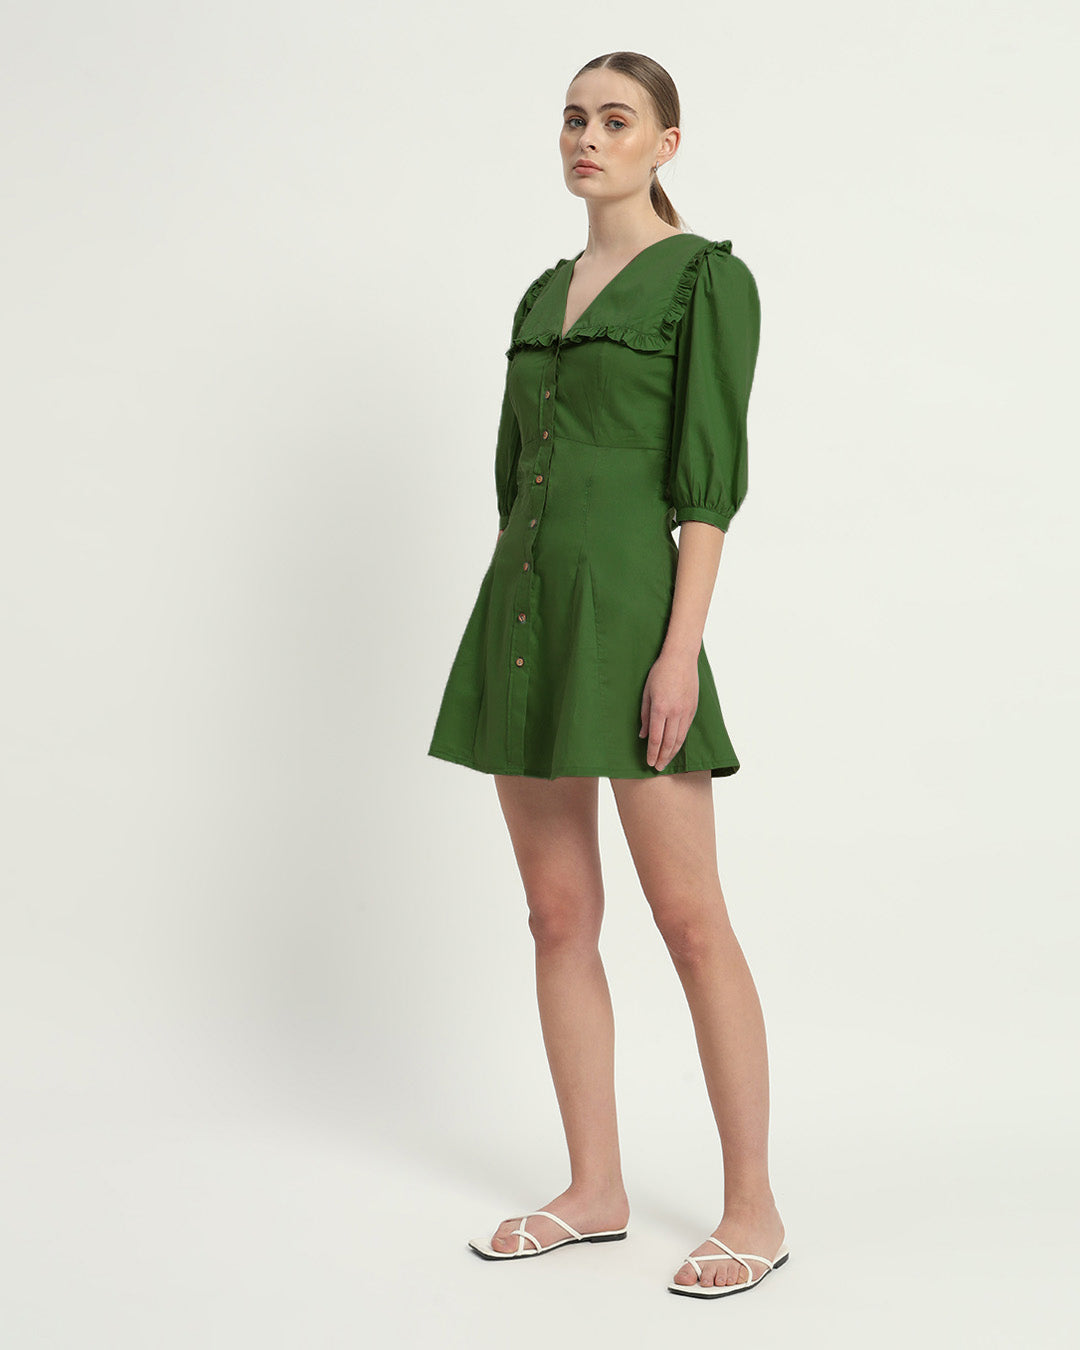 The Isabela Emerald Cotton Dress